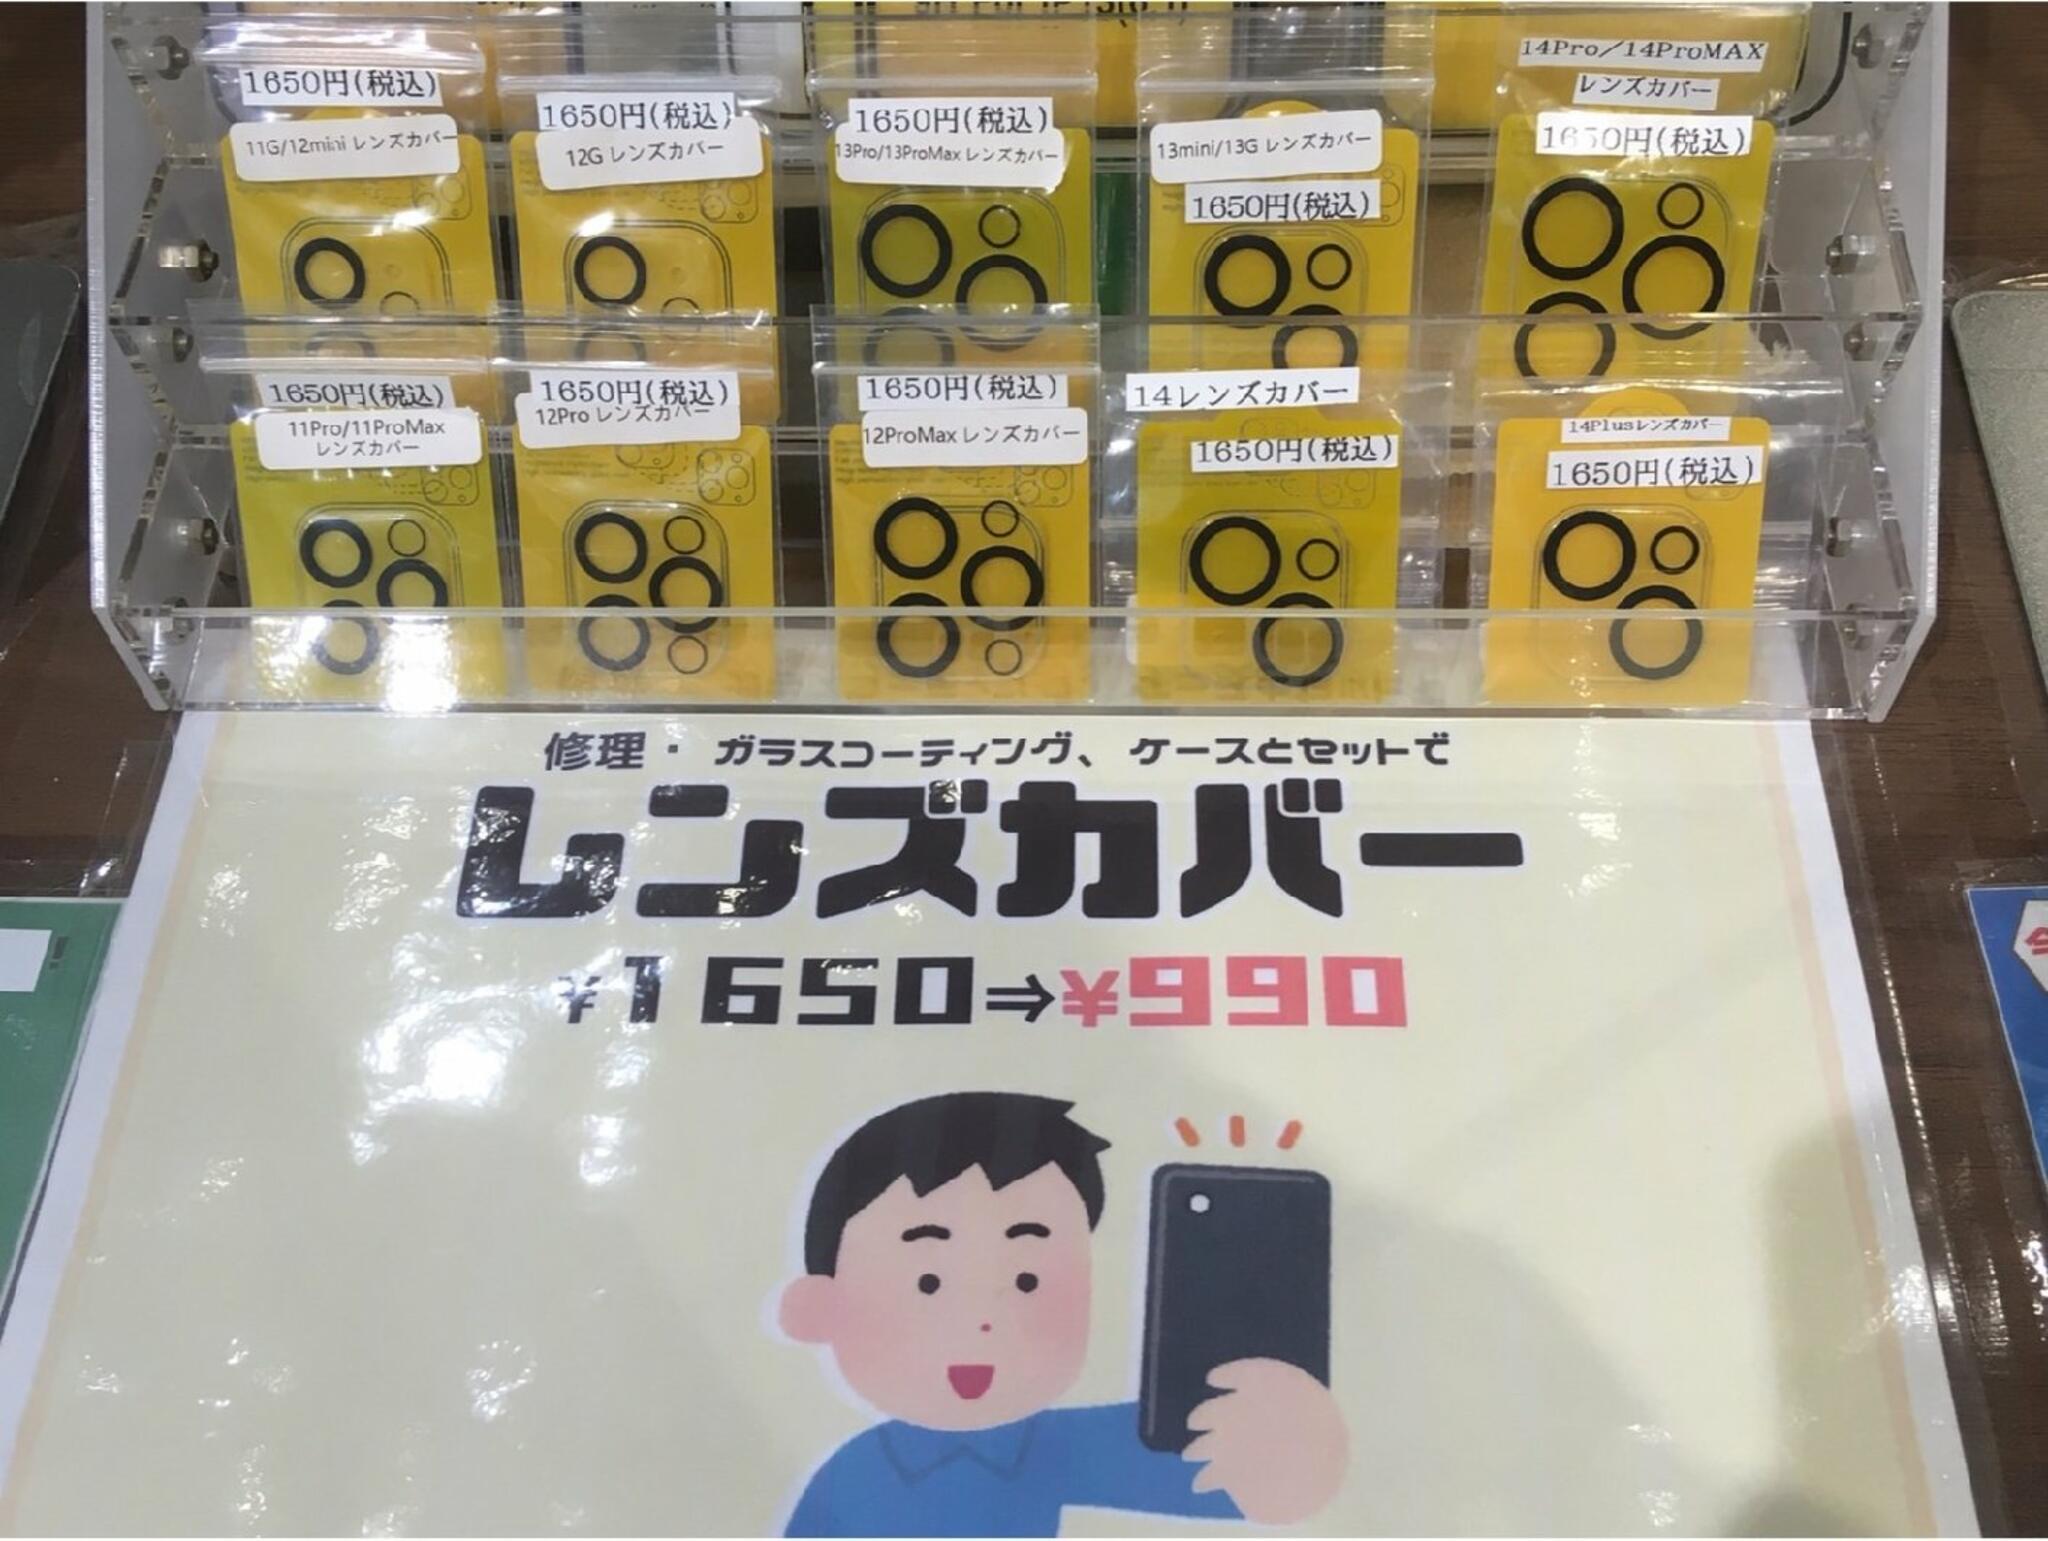 iPhone・iPad・Switch修理店 スマートクール イオンモール広島祇園店からのお知らせ(iPhone11以降のカメラレンズの保護されていますか)に関する写真